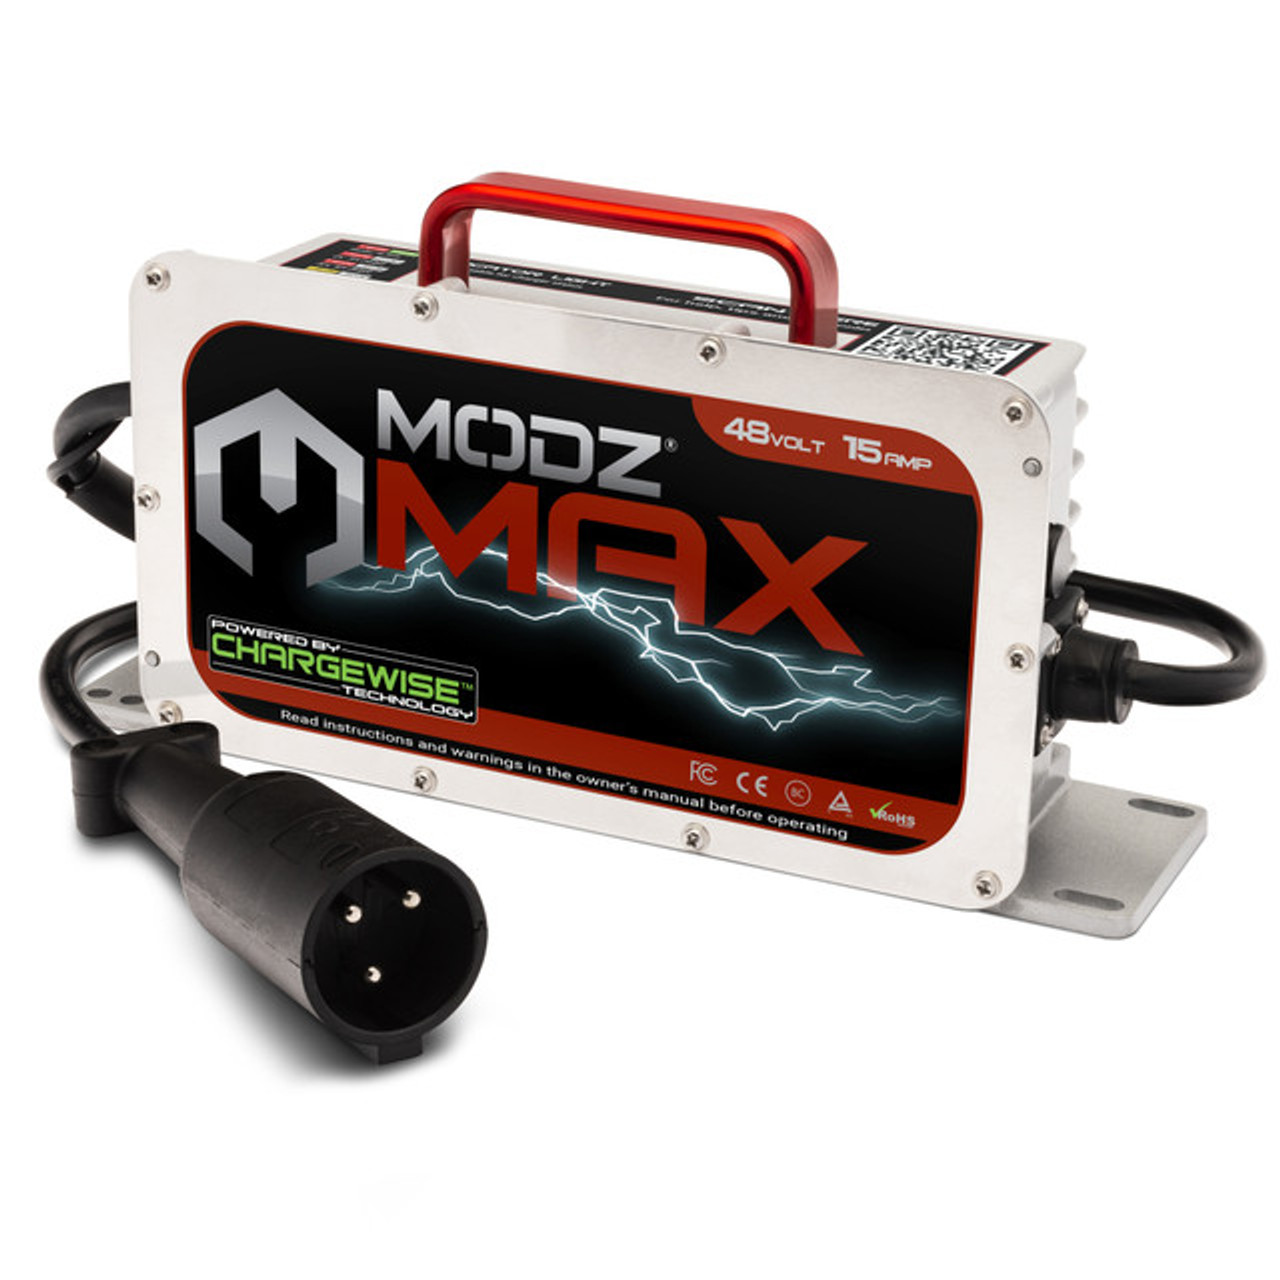 Club Car MODZ MAX48 15 AMP GOLF CART BATTERY CHARGER